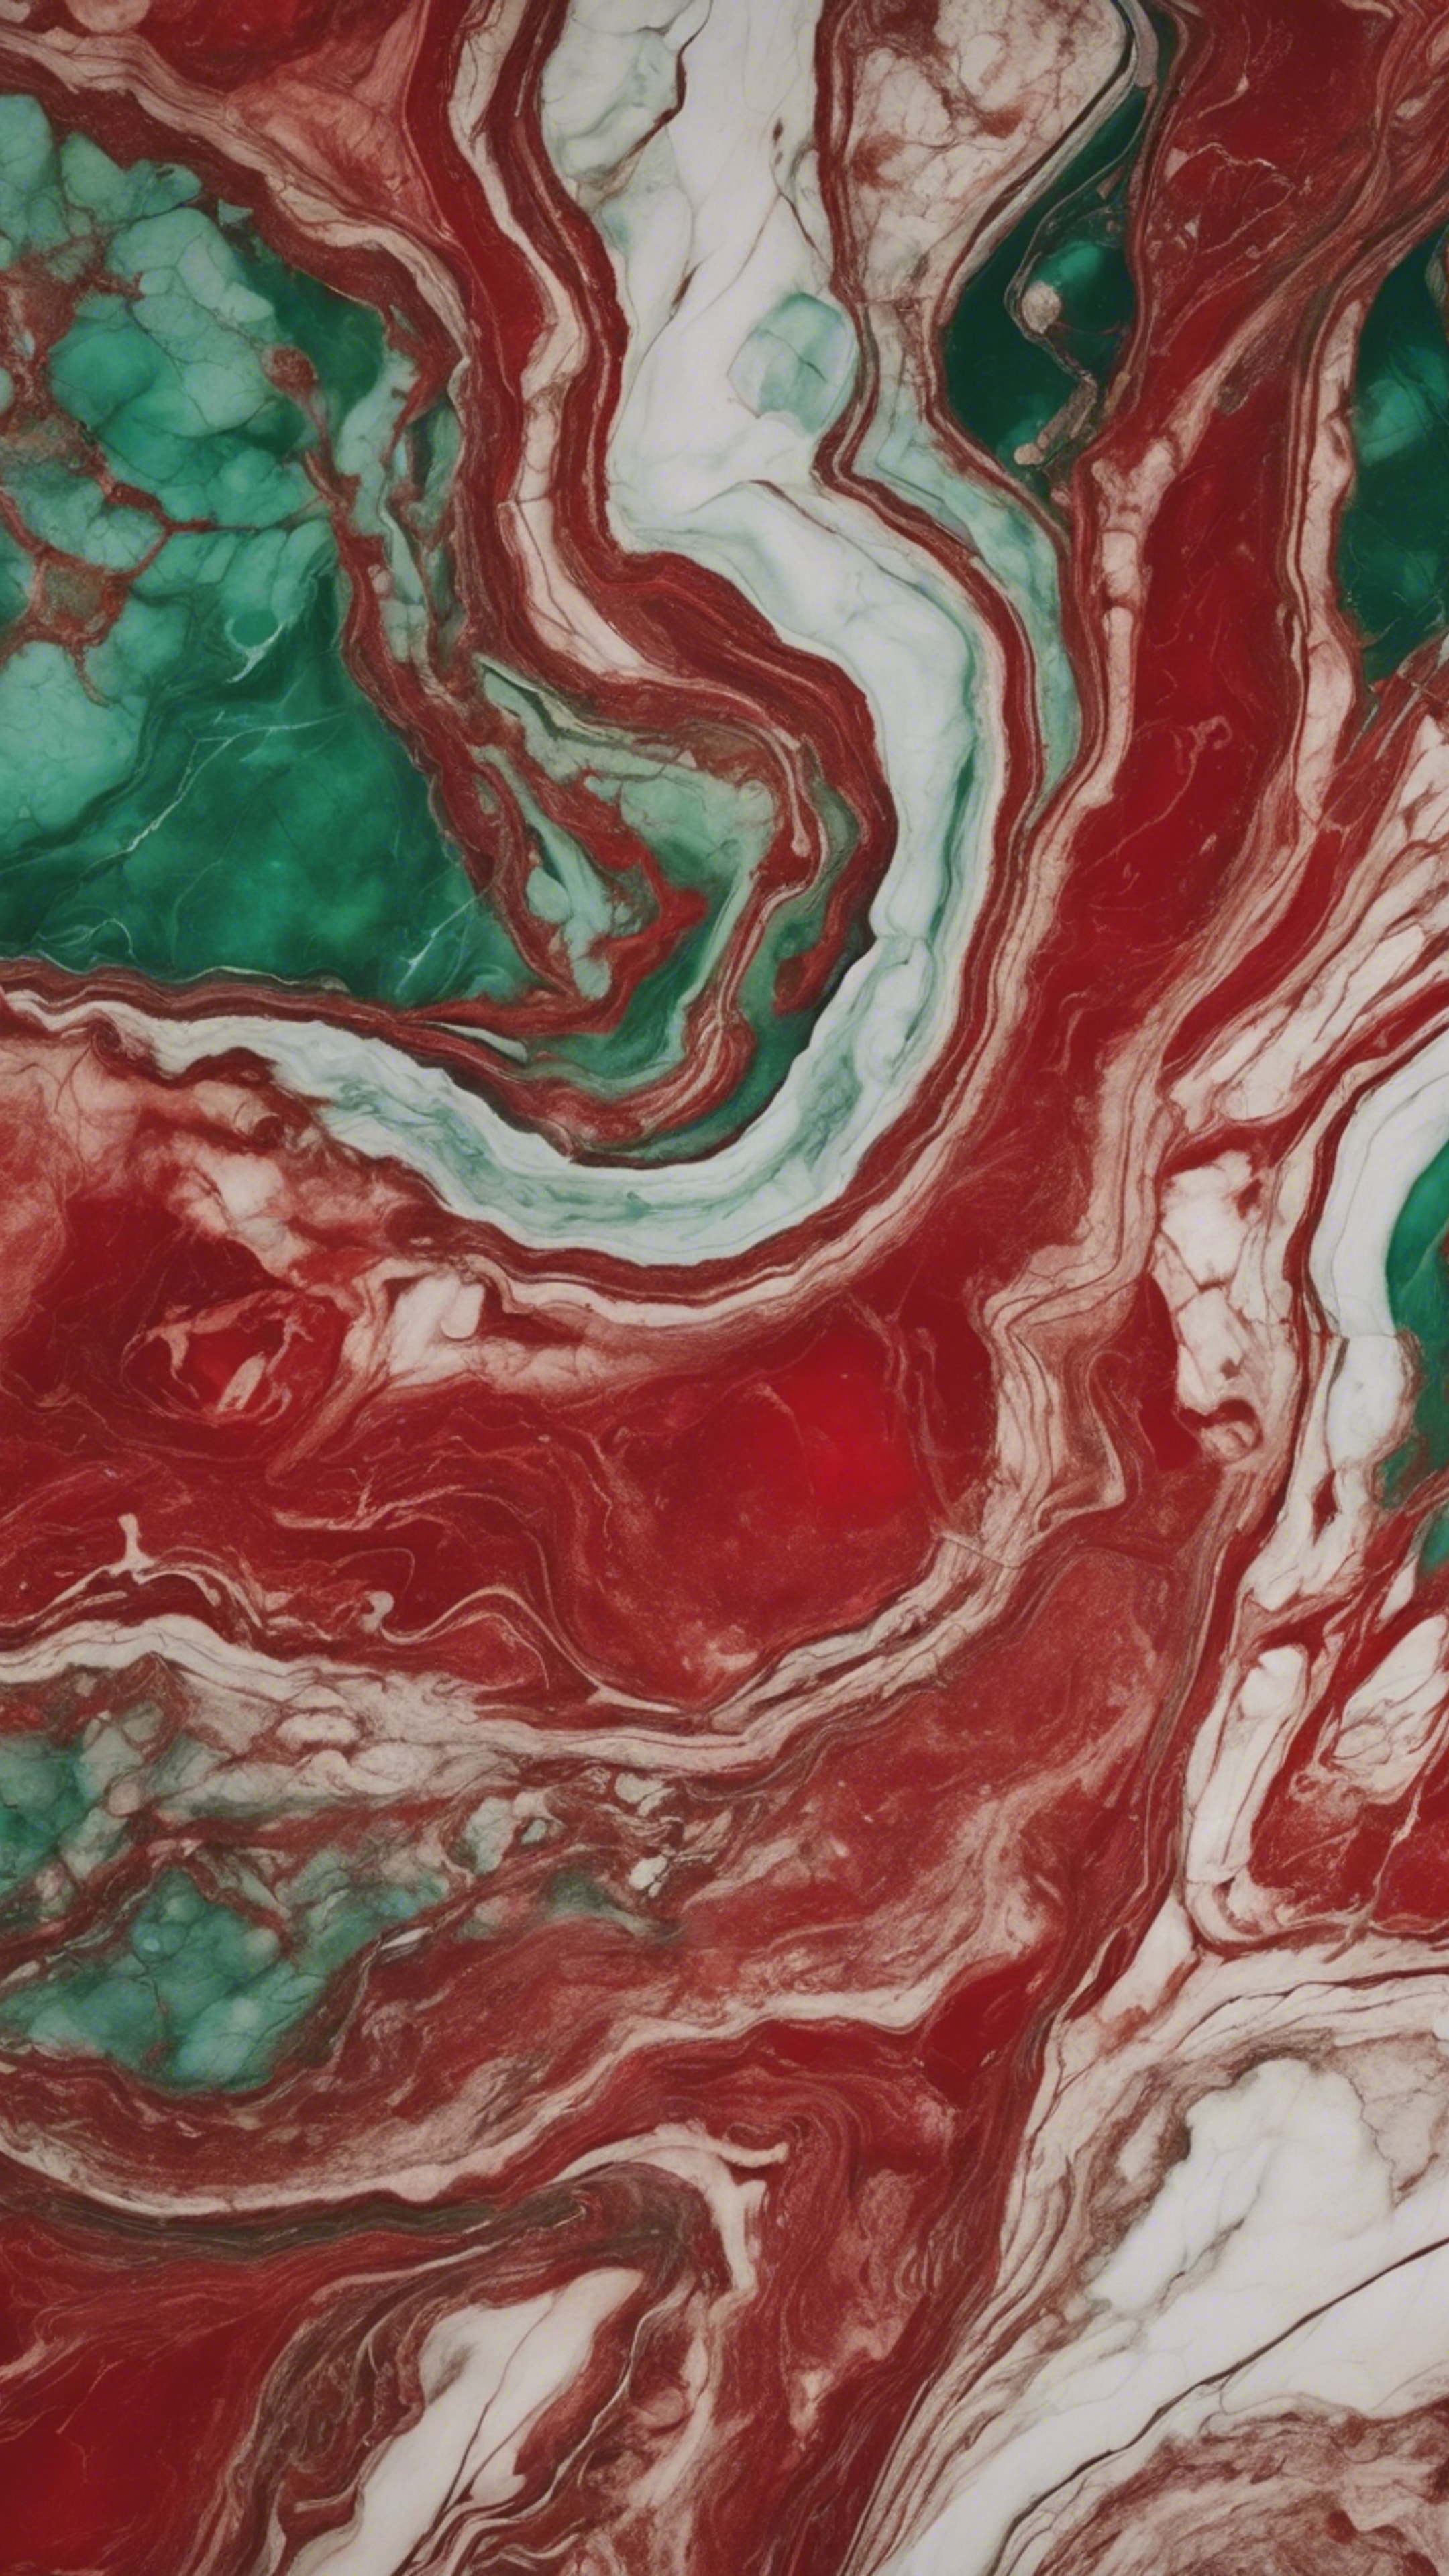 Elegant red and green marble pattern with veins running across. Tapeta[edb4d3fbd47c4b239d5a]